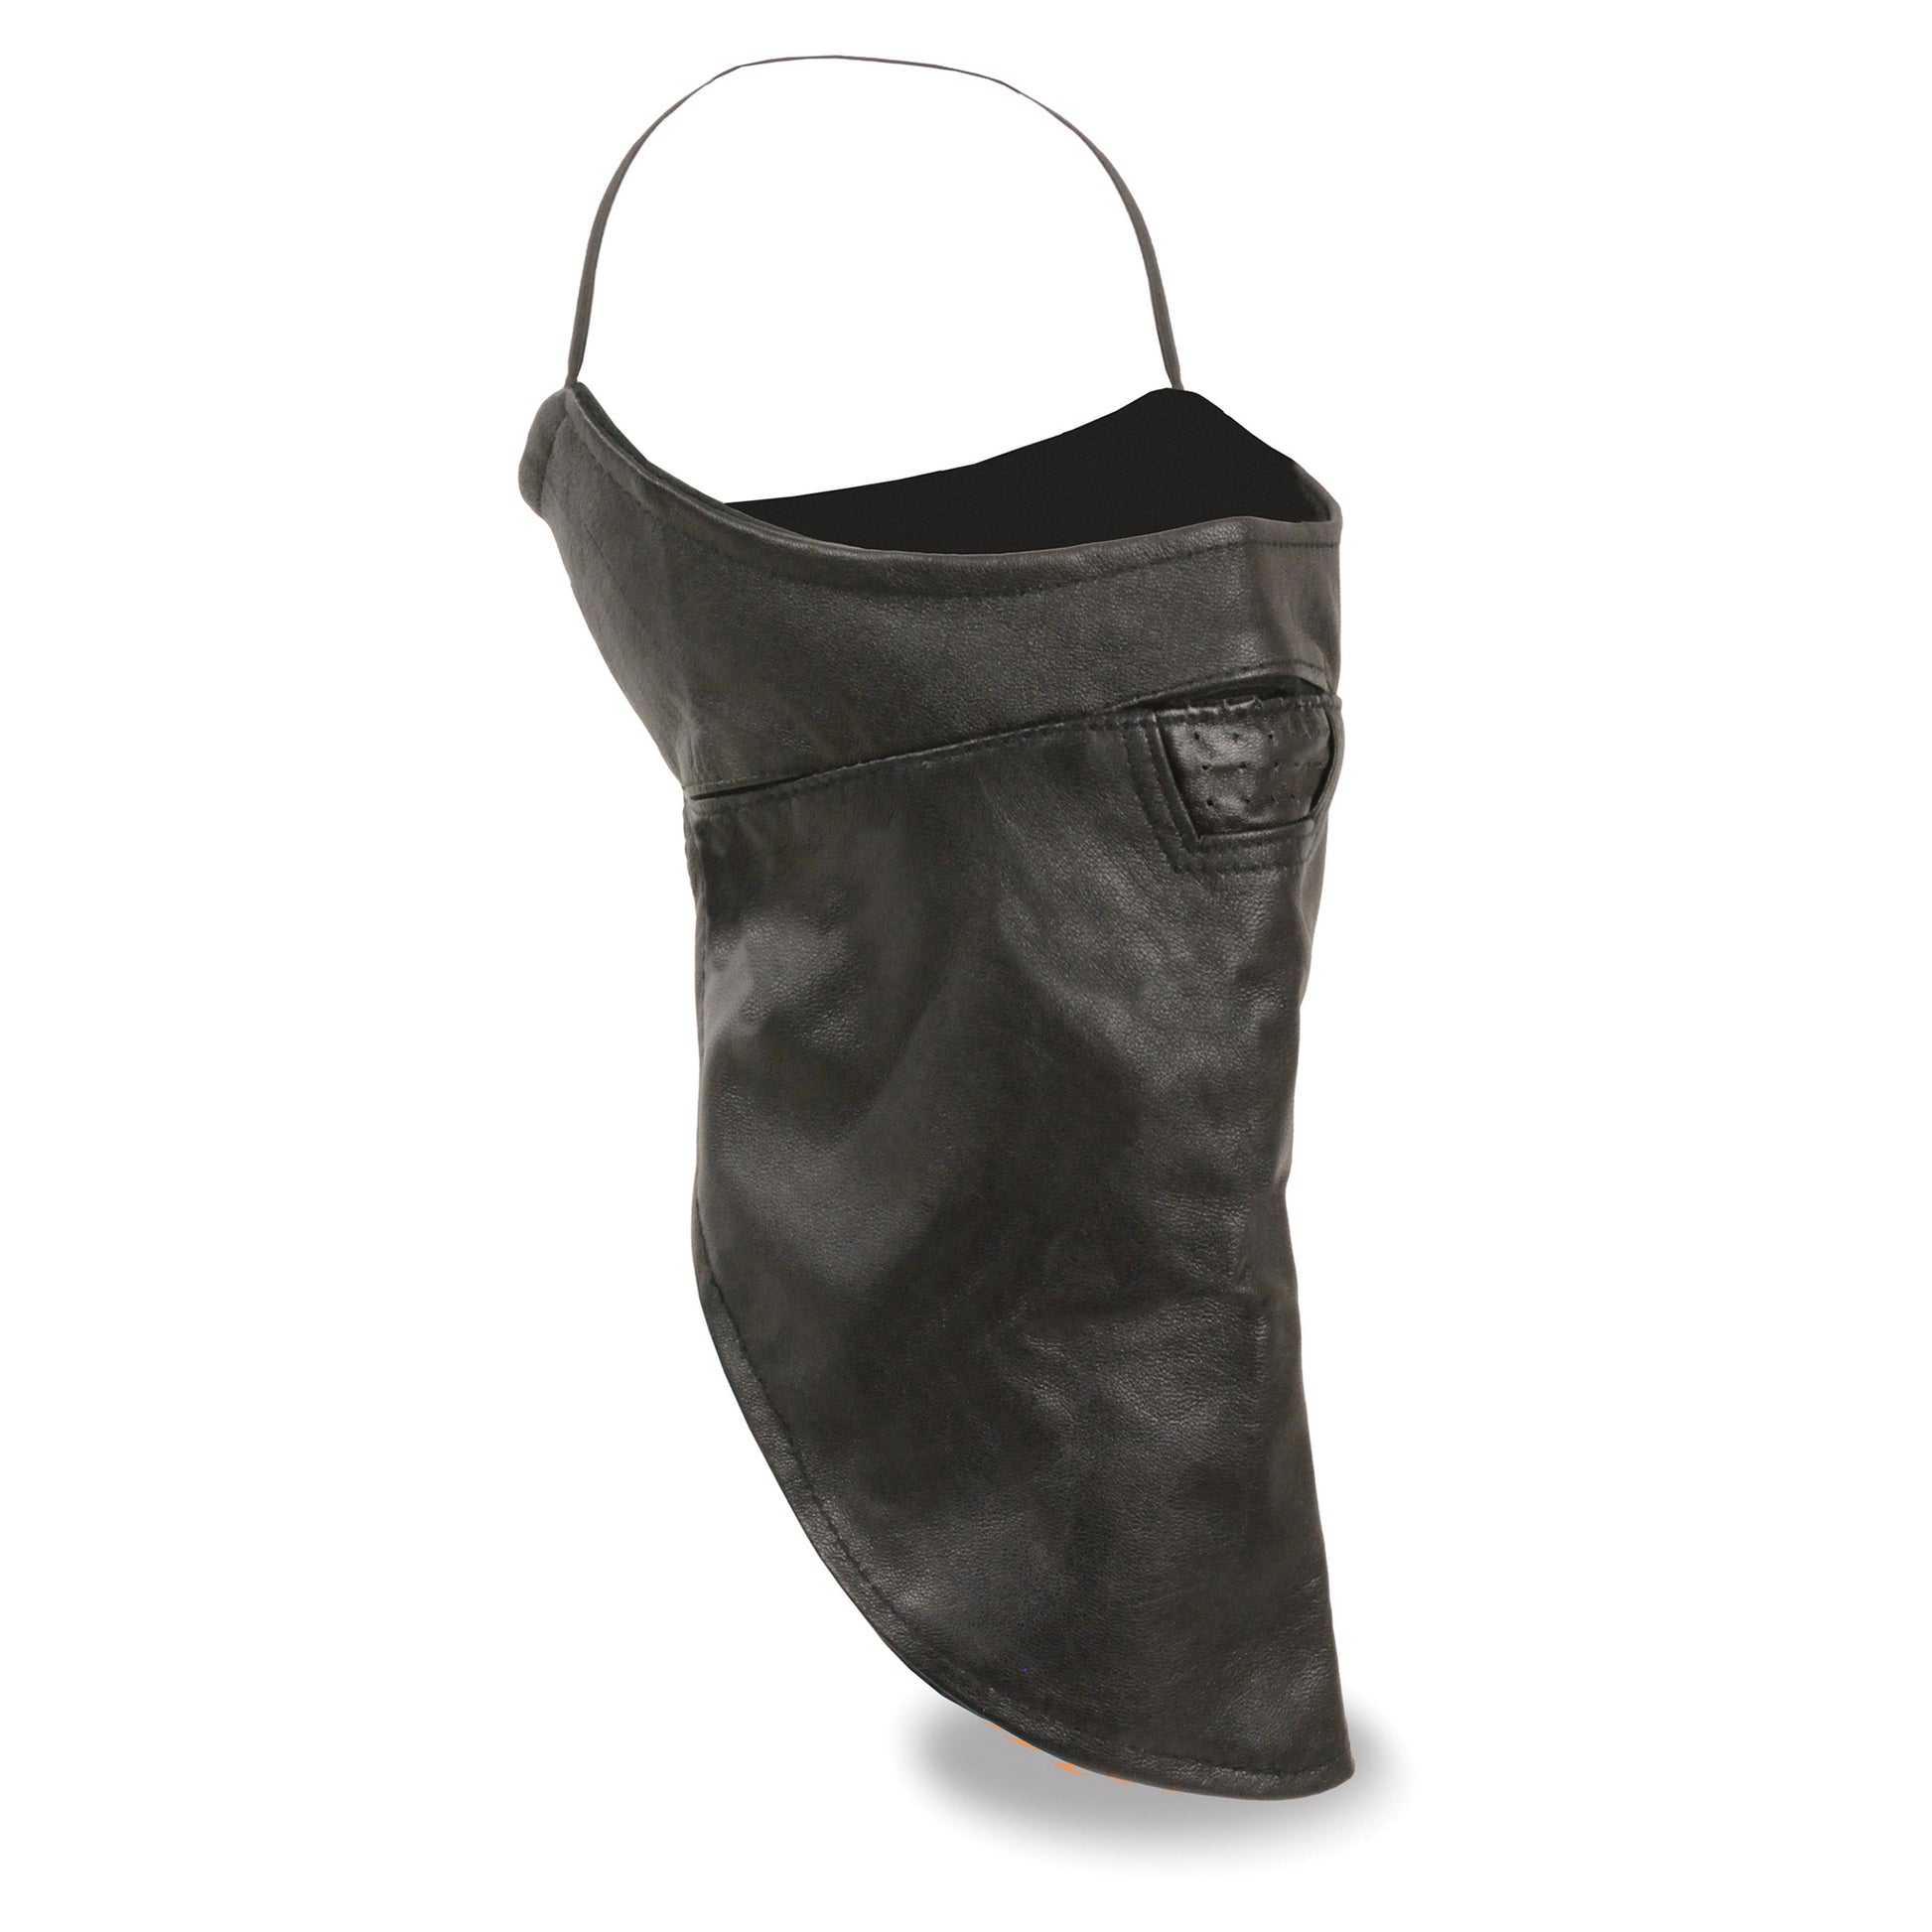 Unisex Premium Leather Face Mask w/ Fleece Liner